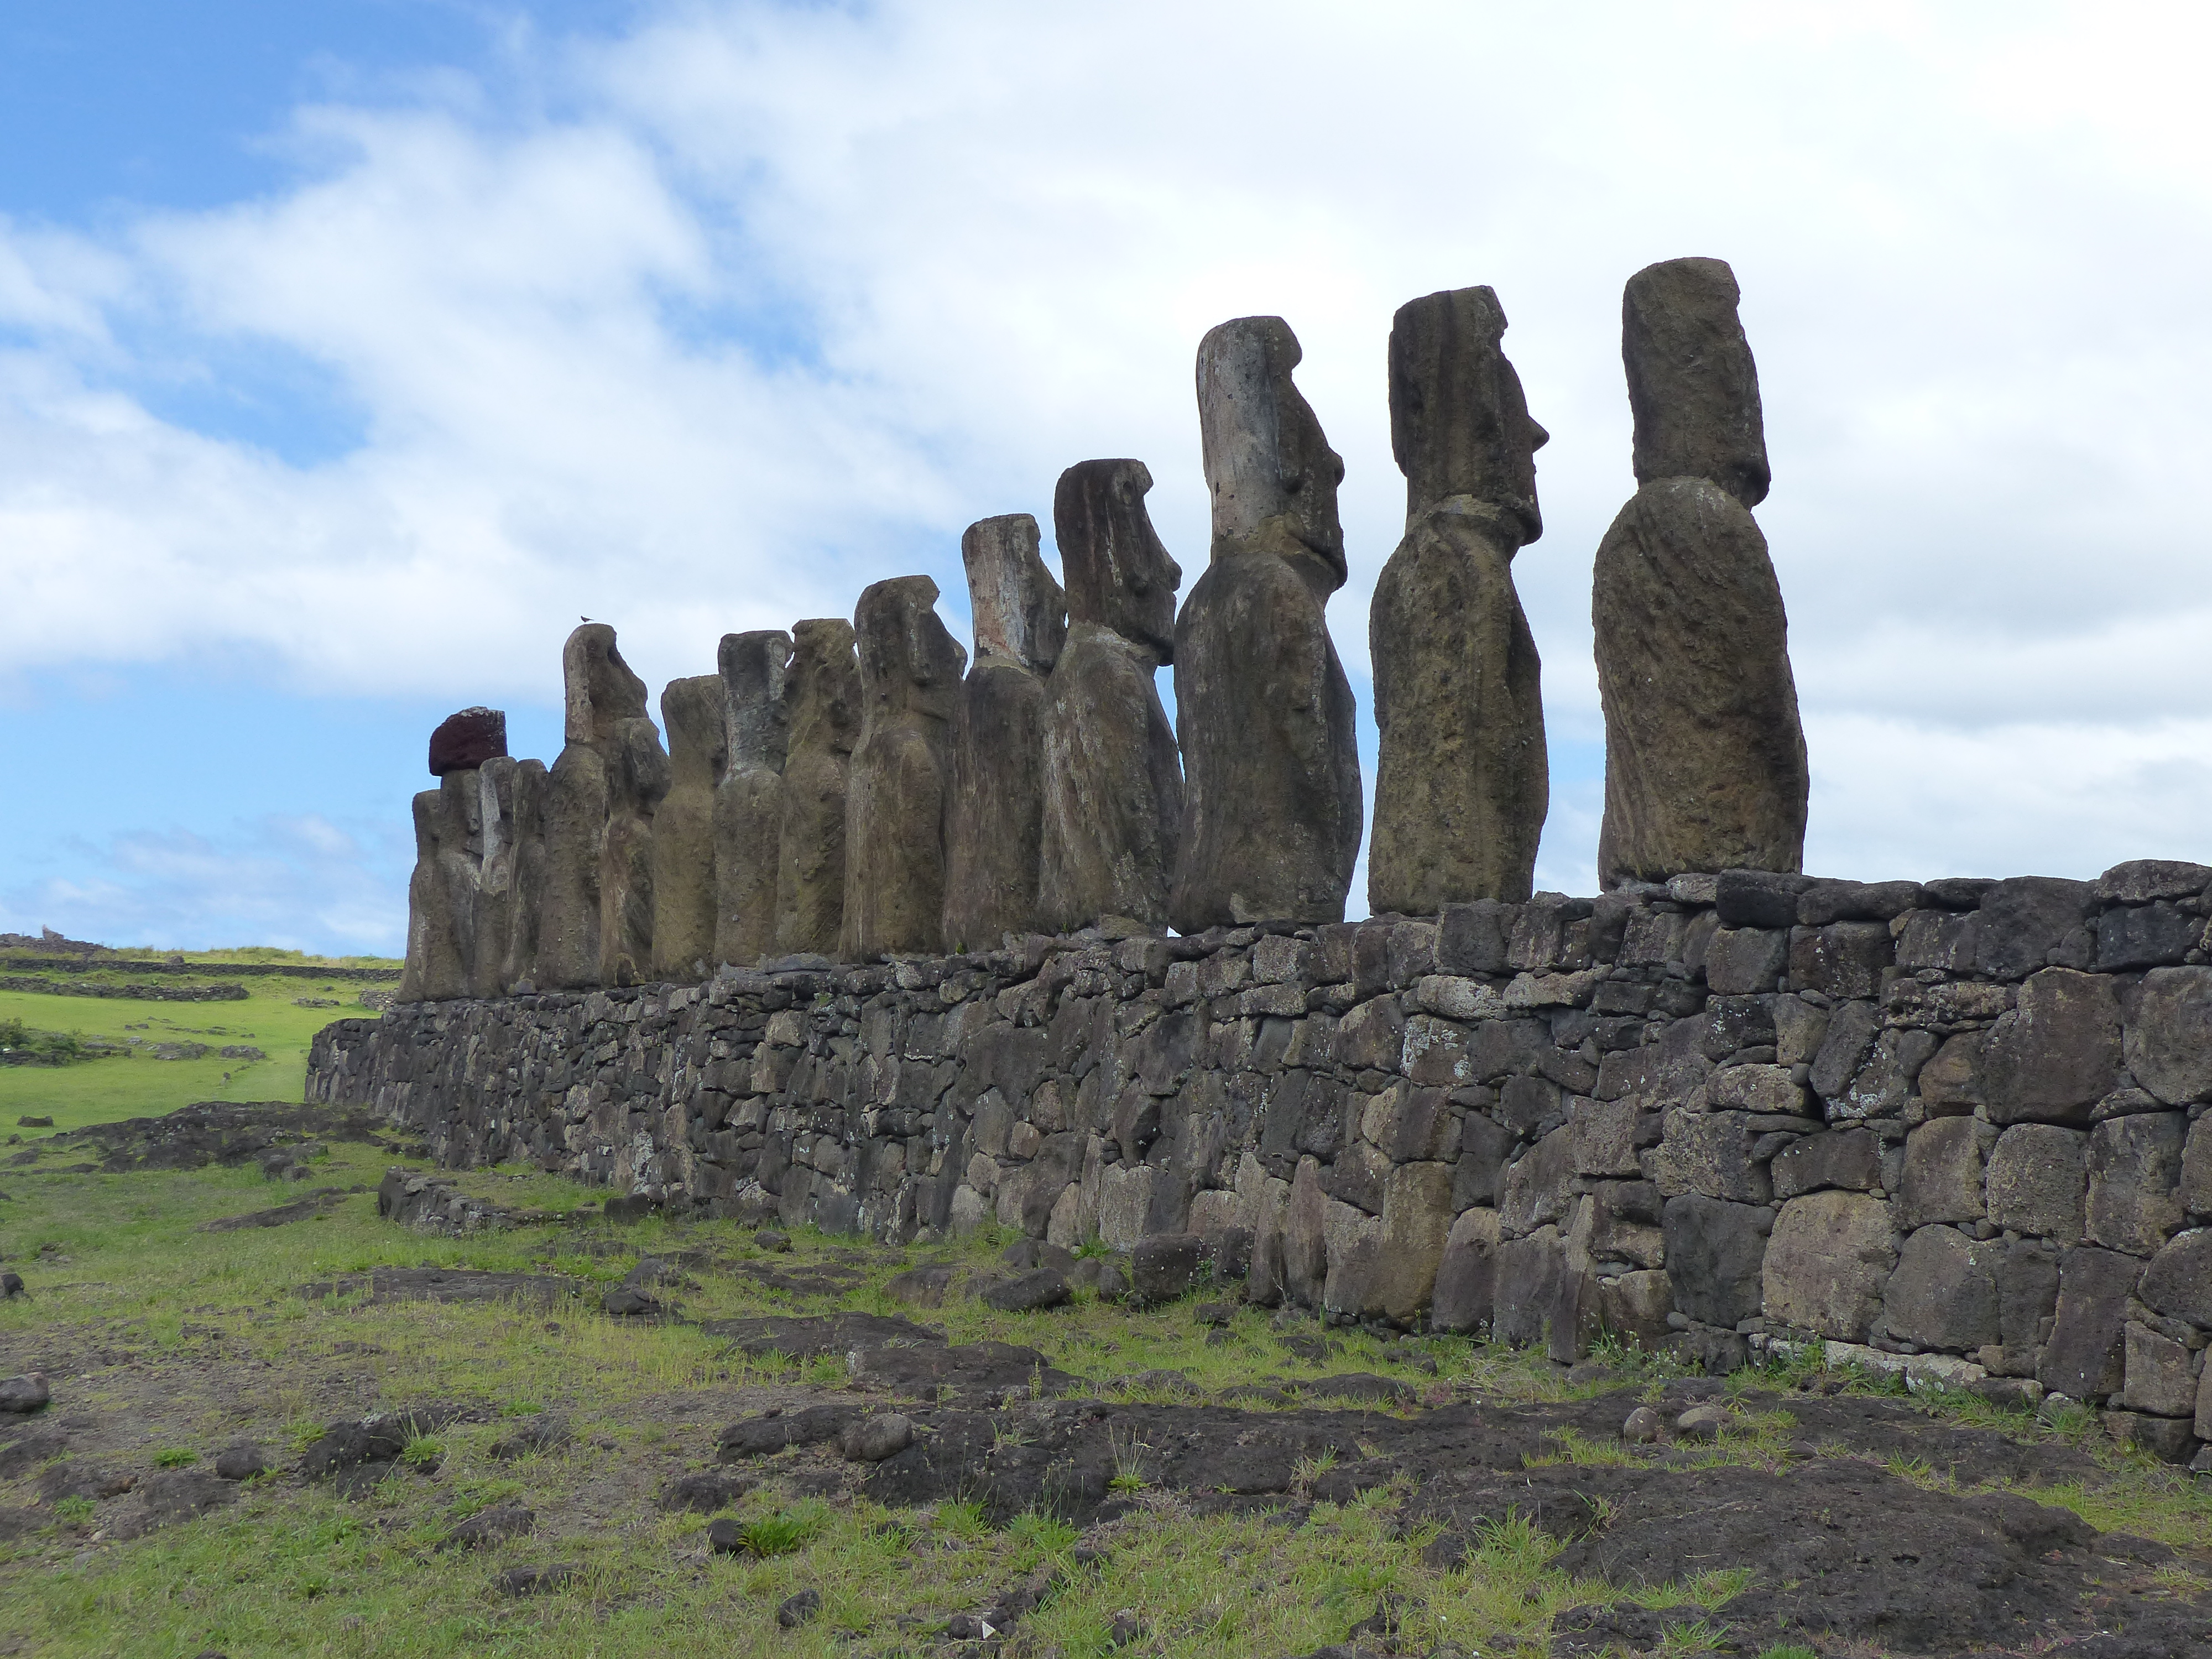 At Ahu Tongariki, where 15 restored moai guard the Easter Island 